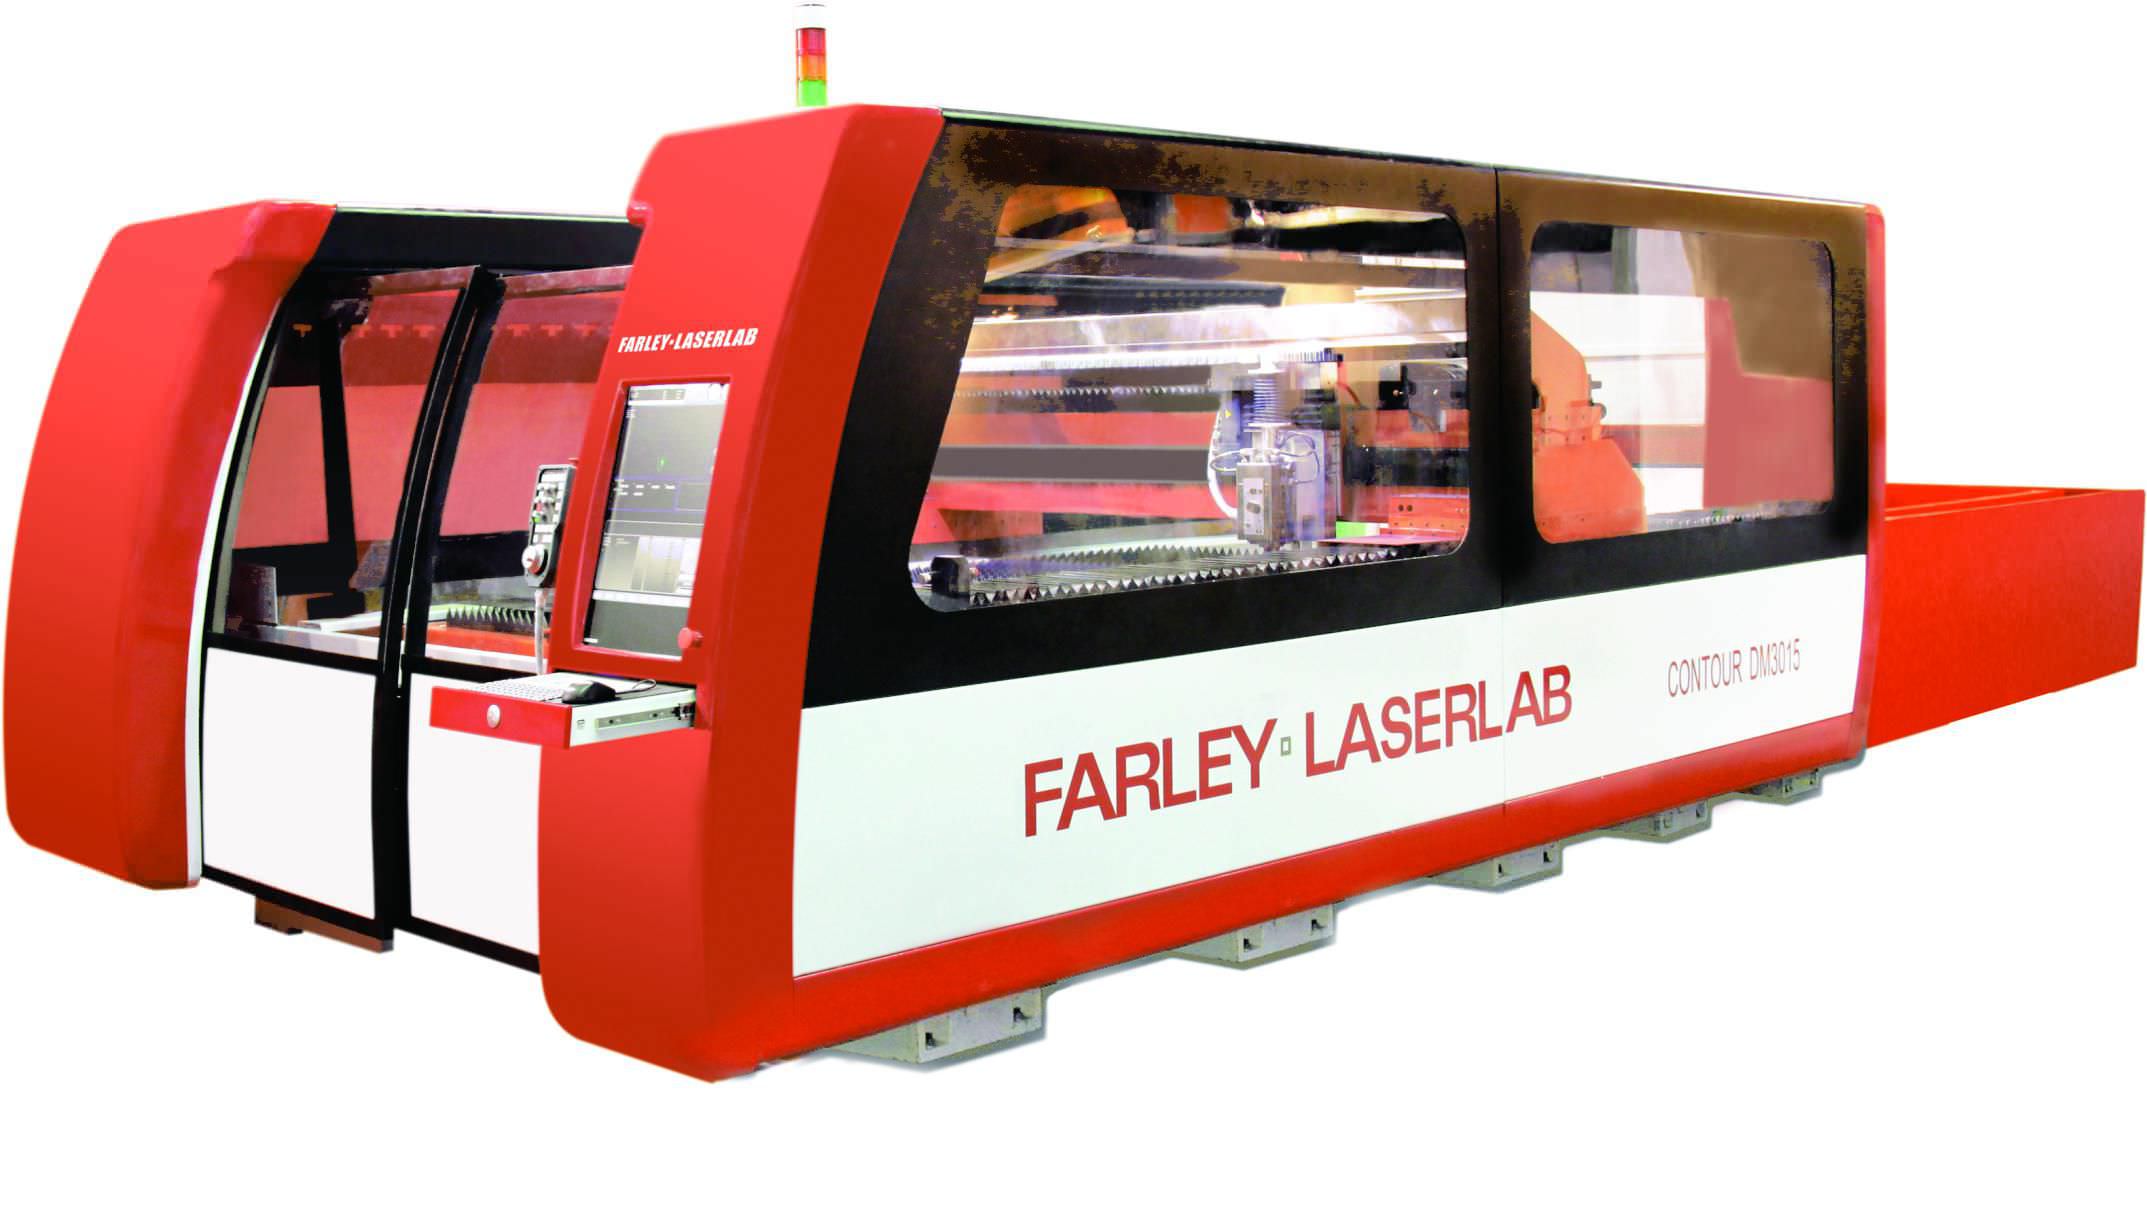 Co2 laser cutting machines